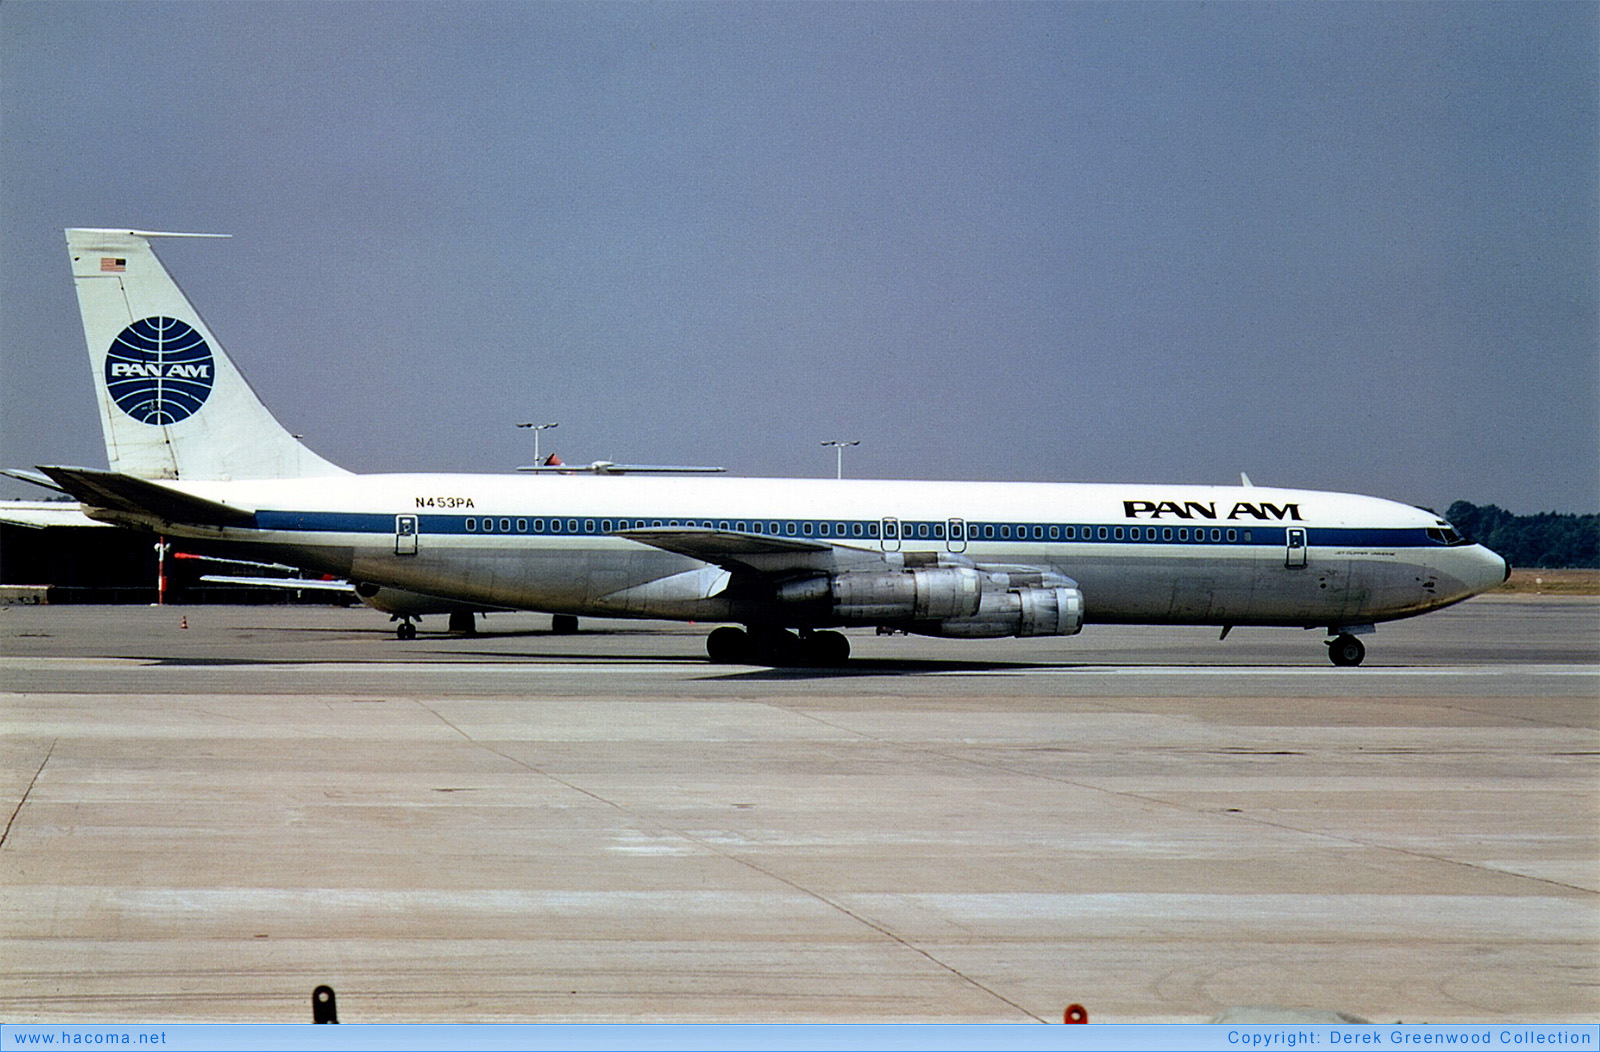 Photo of N453PA - Pan Am Clipper Universe / Falcon - Hamburg Airport - 1975